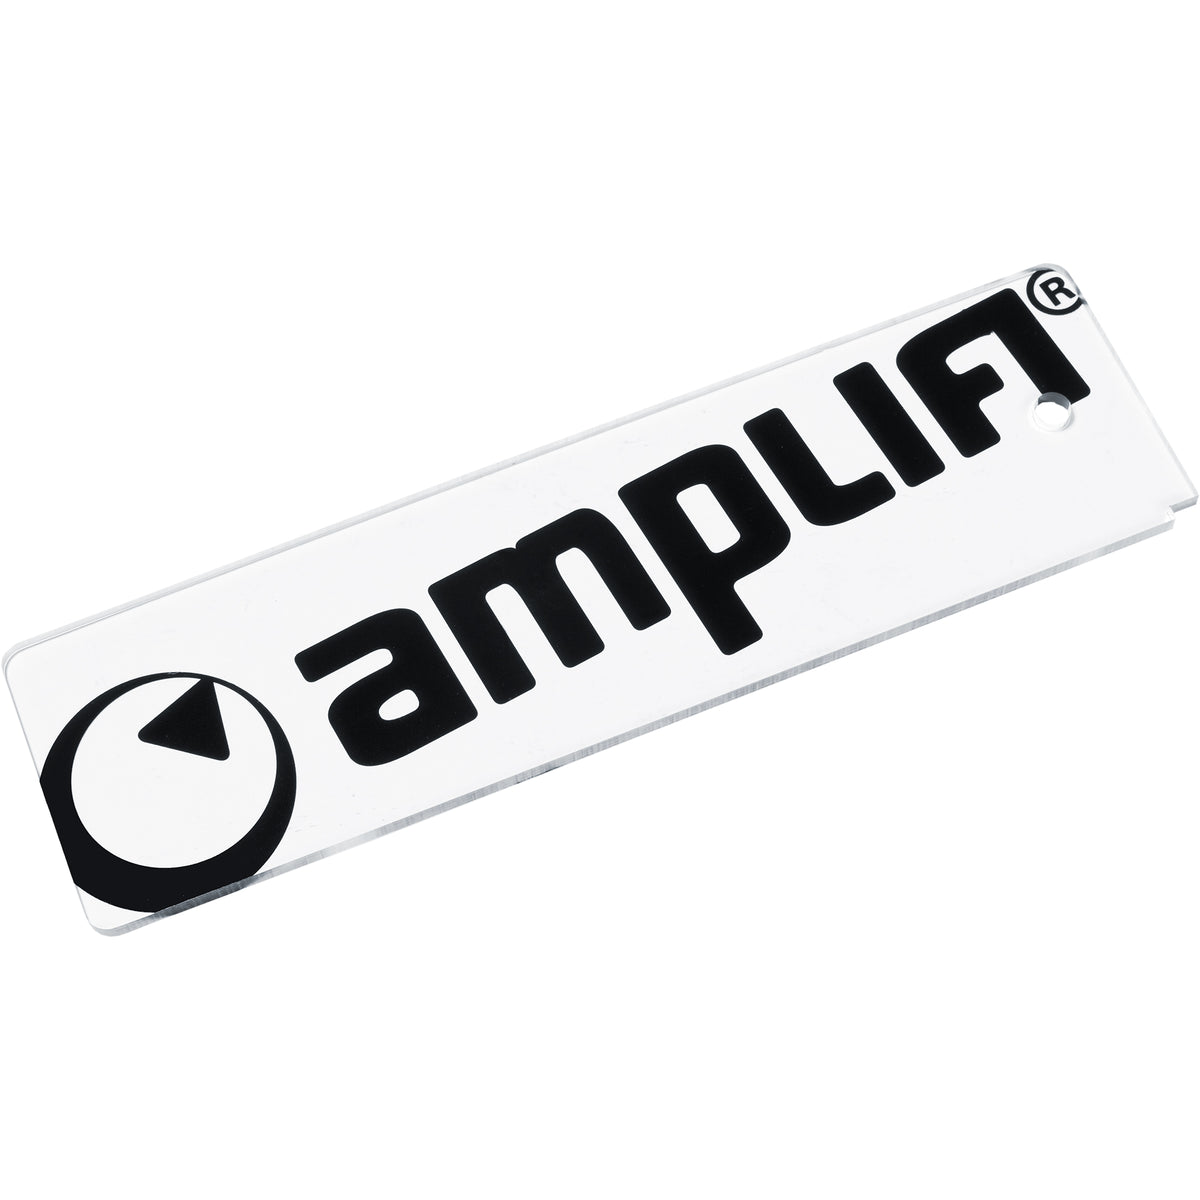 M6X16 Mounting Hardware for Snowboardboardbindings - Set – AMPLIFI SPORTS